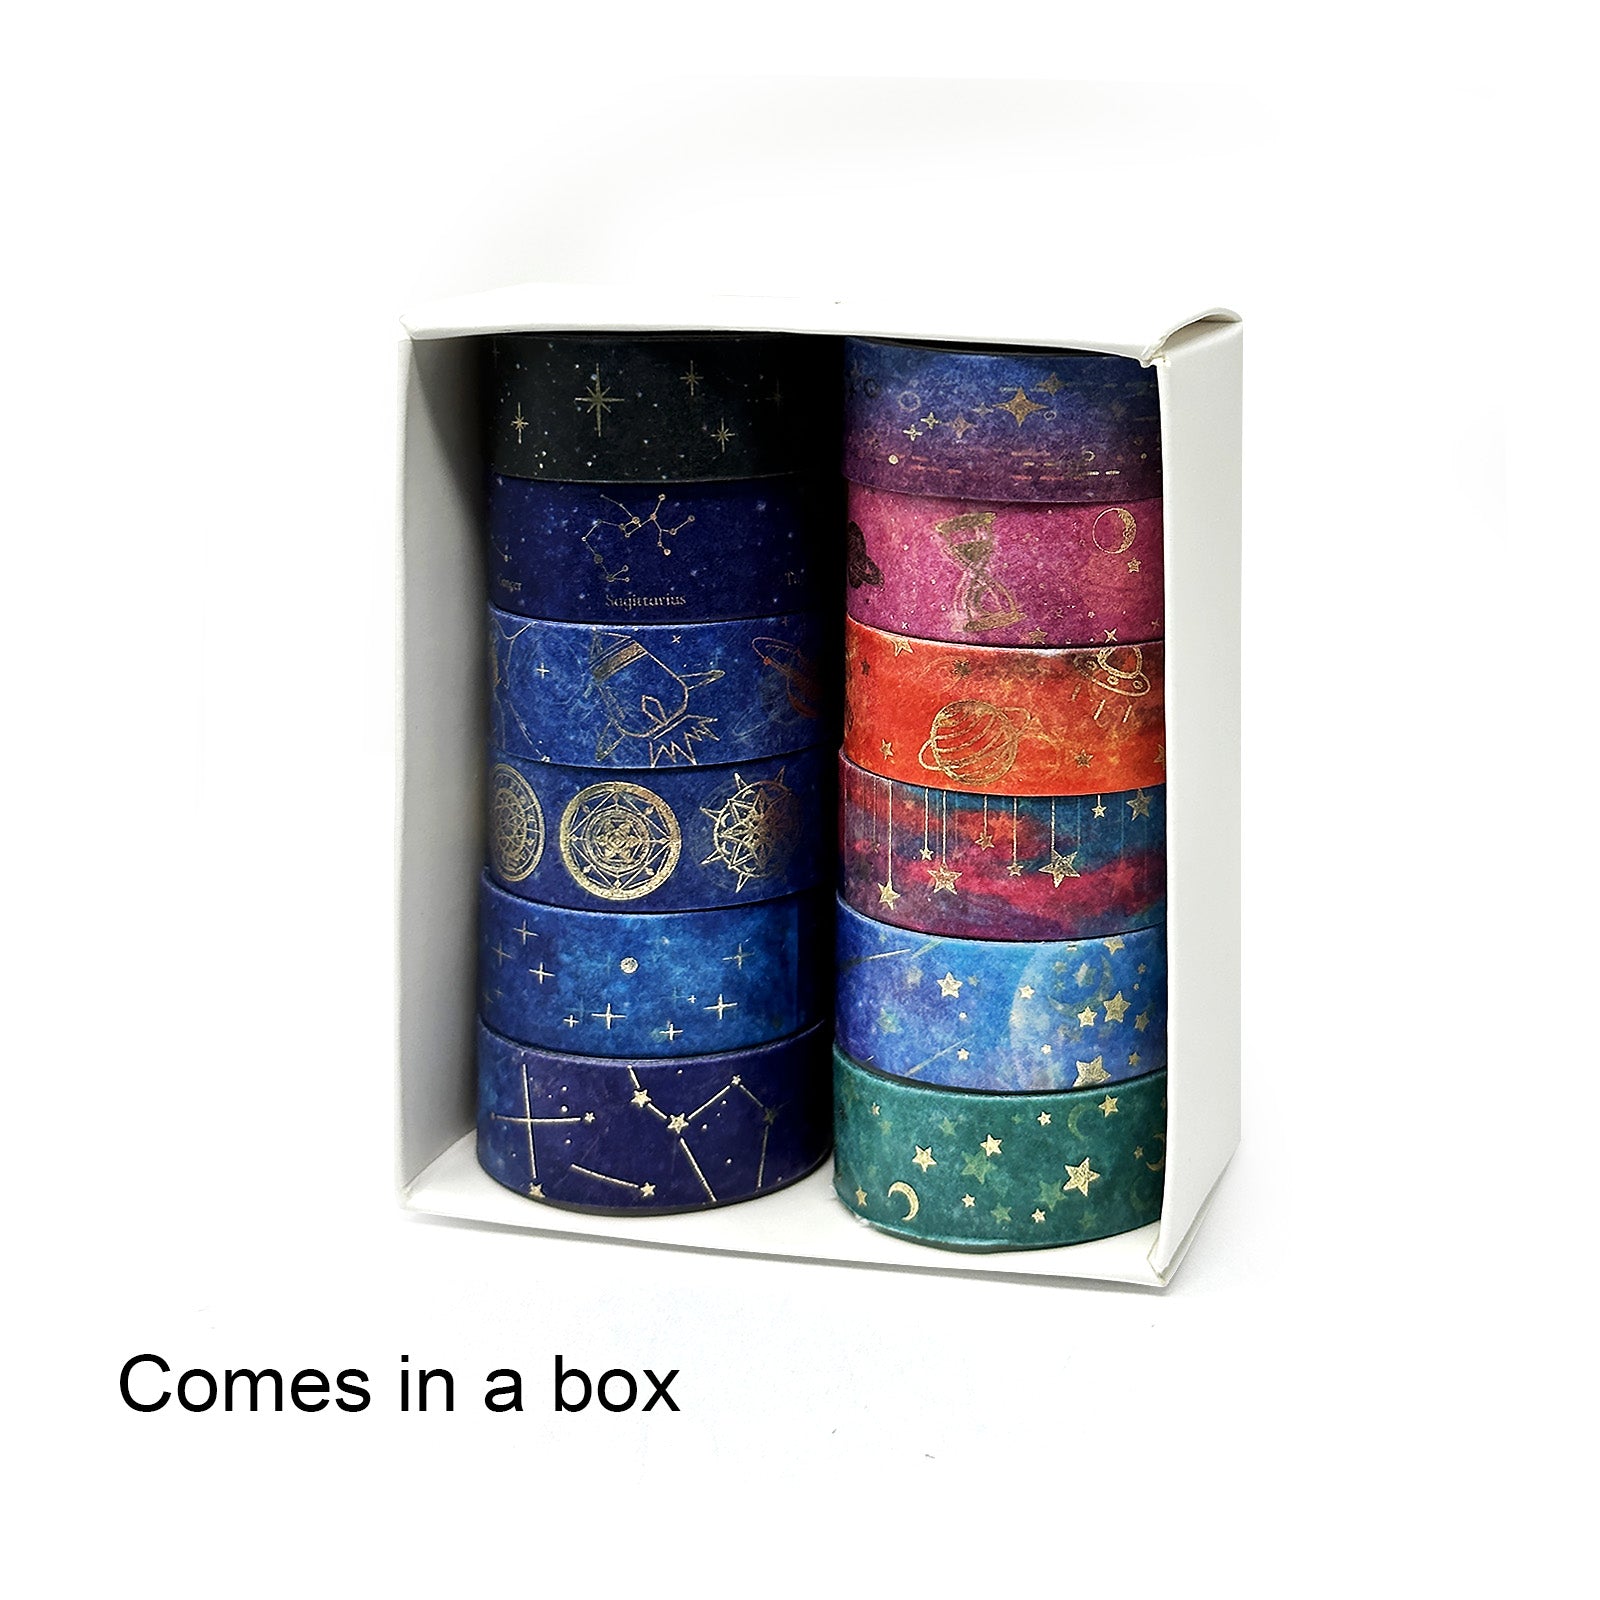 Wrapables Decorative Washi Tape Box Set for DIY Arts & Crafts (12